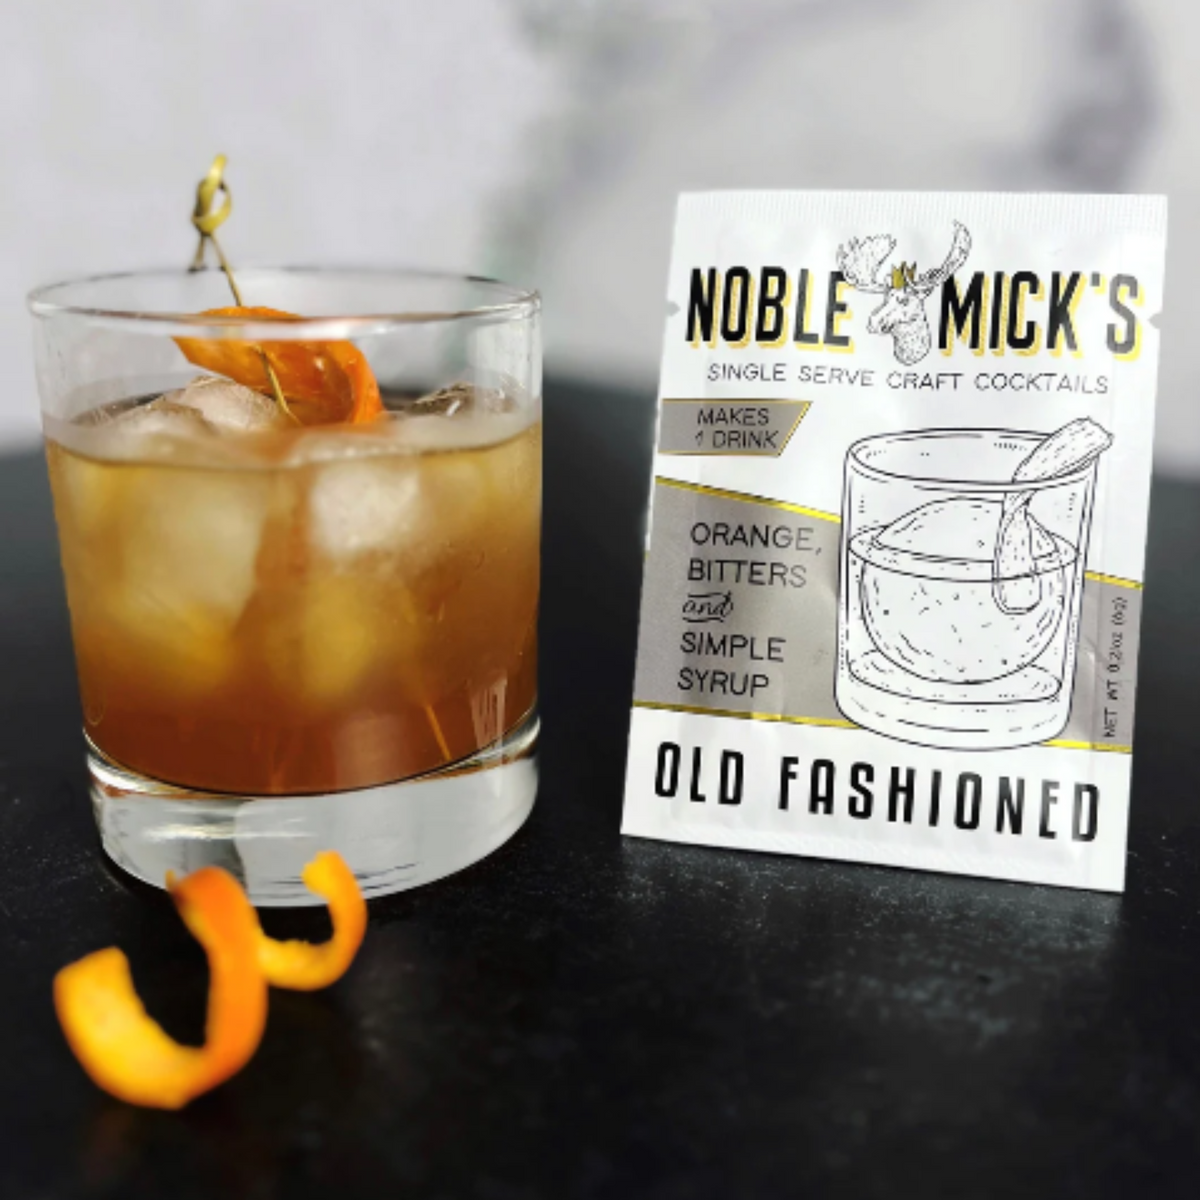 Old Fashioned - single serve craft cocktails